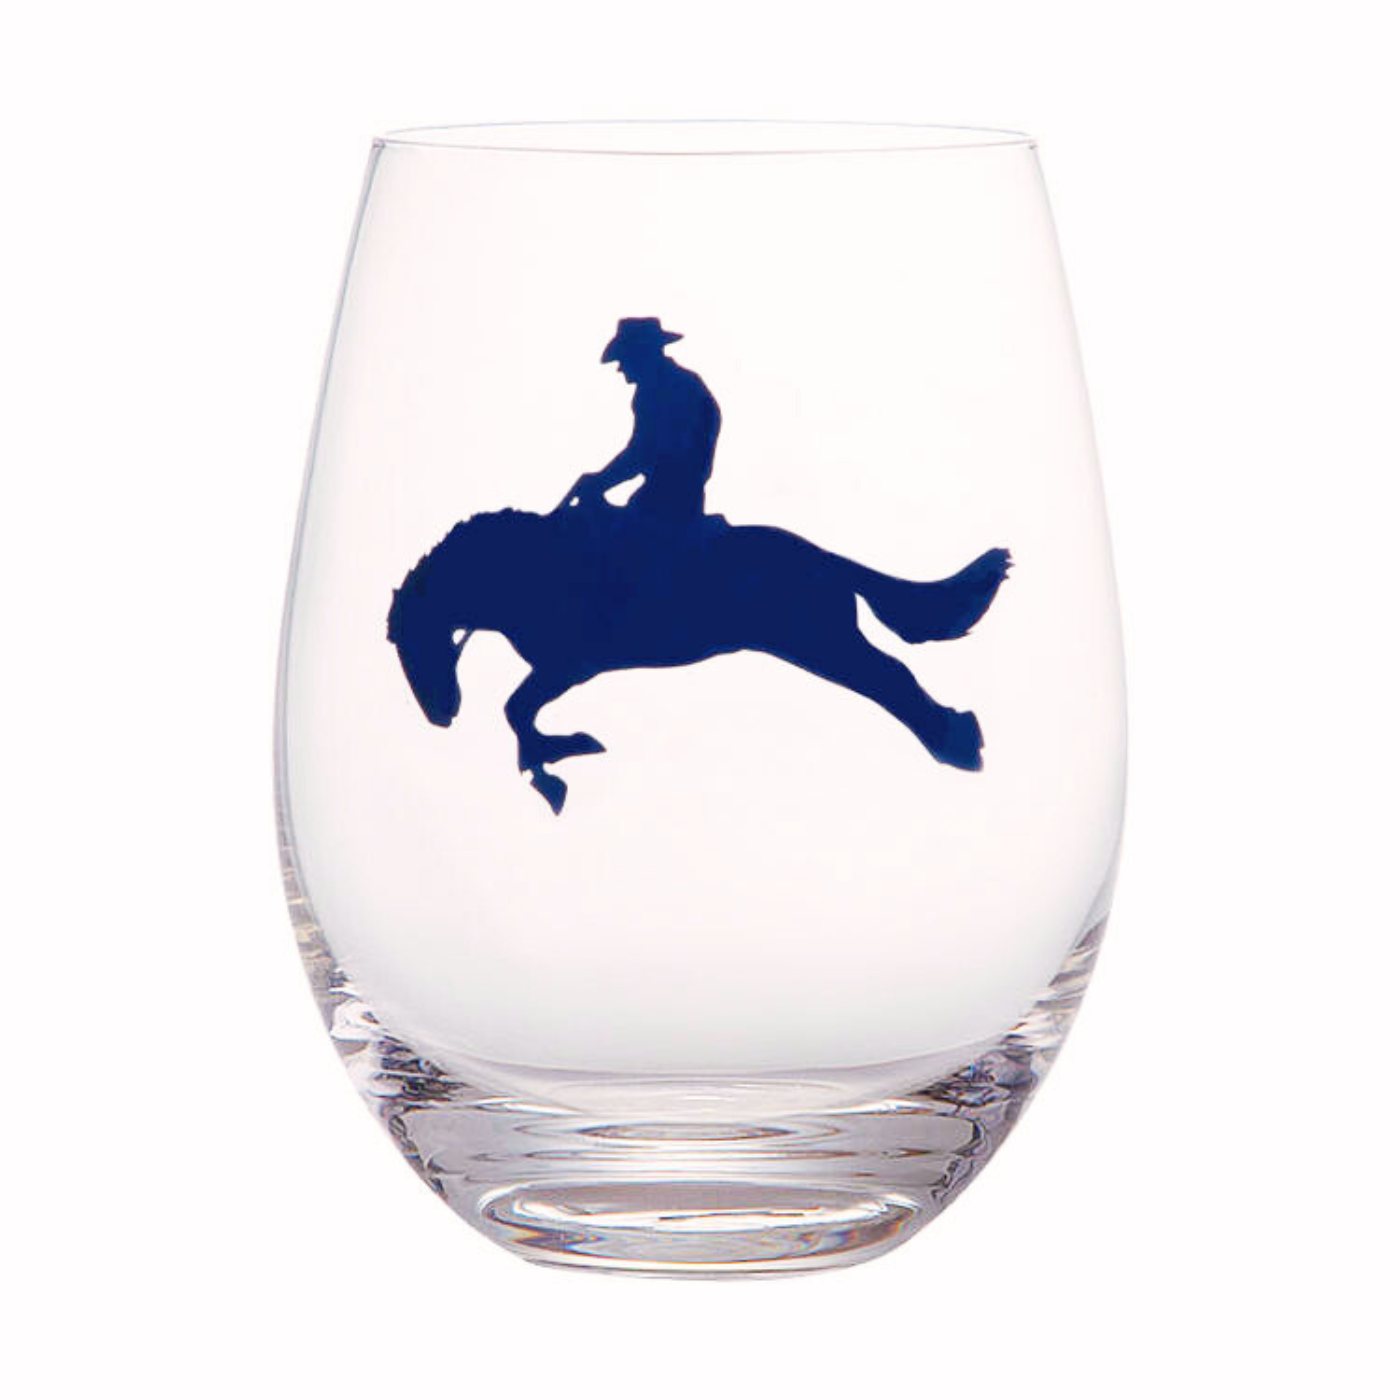 Rodeo Cowgirl Cowboy Wine Glass Set of 4 - Mahjong Texas match  - Texas bull horses calf mustangRodeo Cowgirl Cowboy Wine Glass Set of 4 - Mahjong Texas match  - Texas bull horses calf mustang